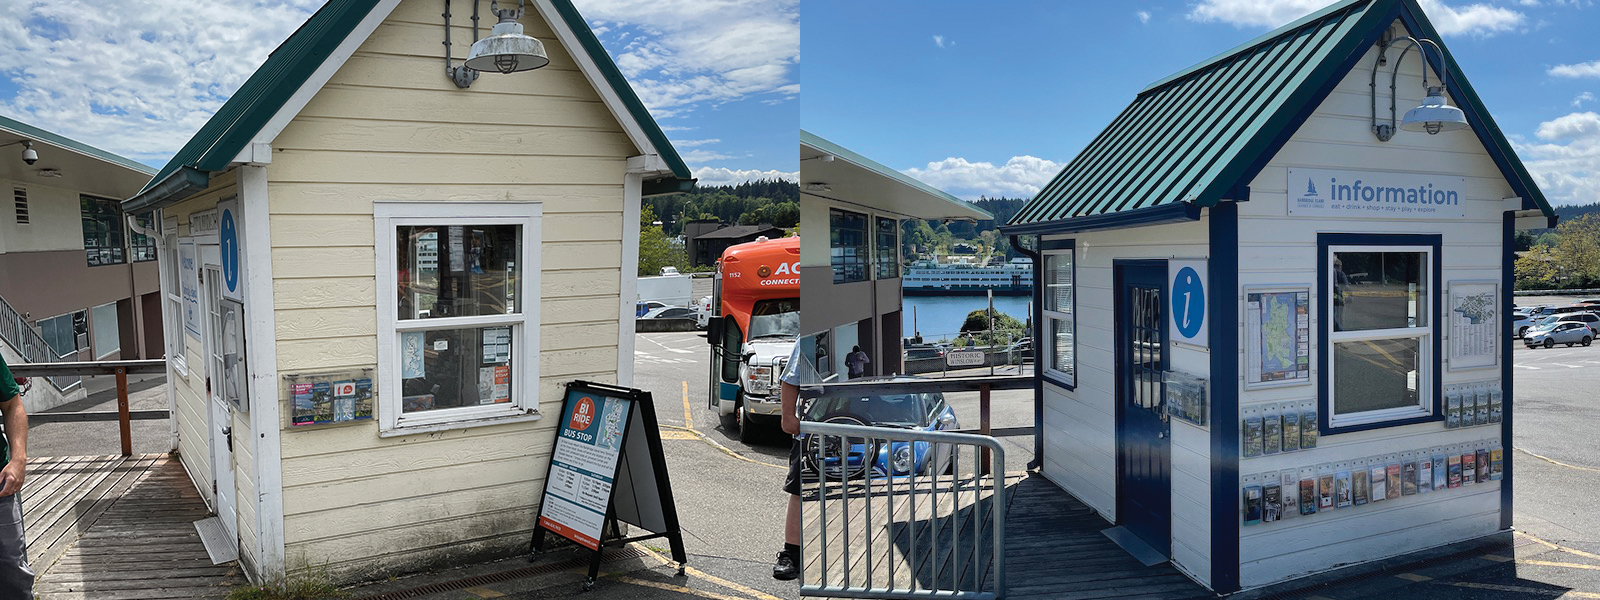 Bainbridge Island Ferry Terminal Information Kiosk Before After